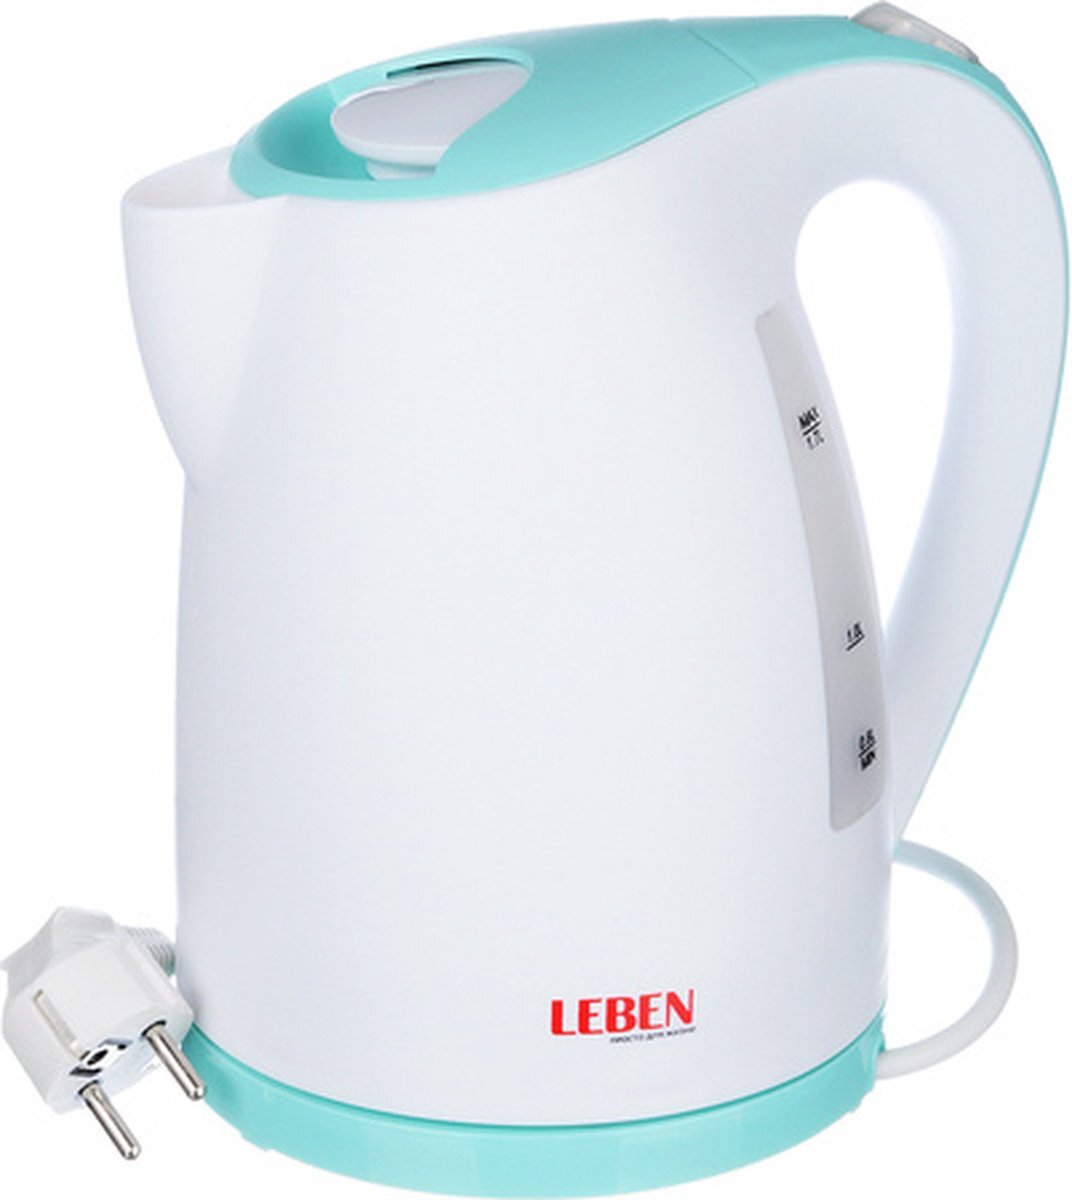 Leben waterkoker - 1,7 liter - 1850 watt - Blauw